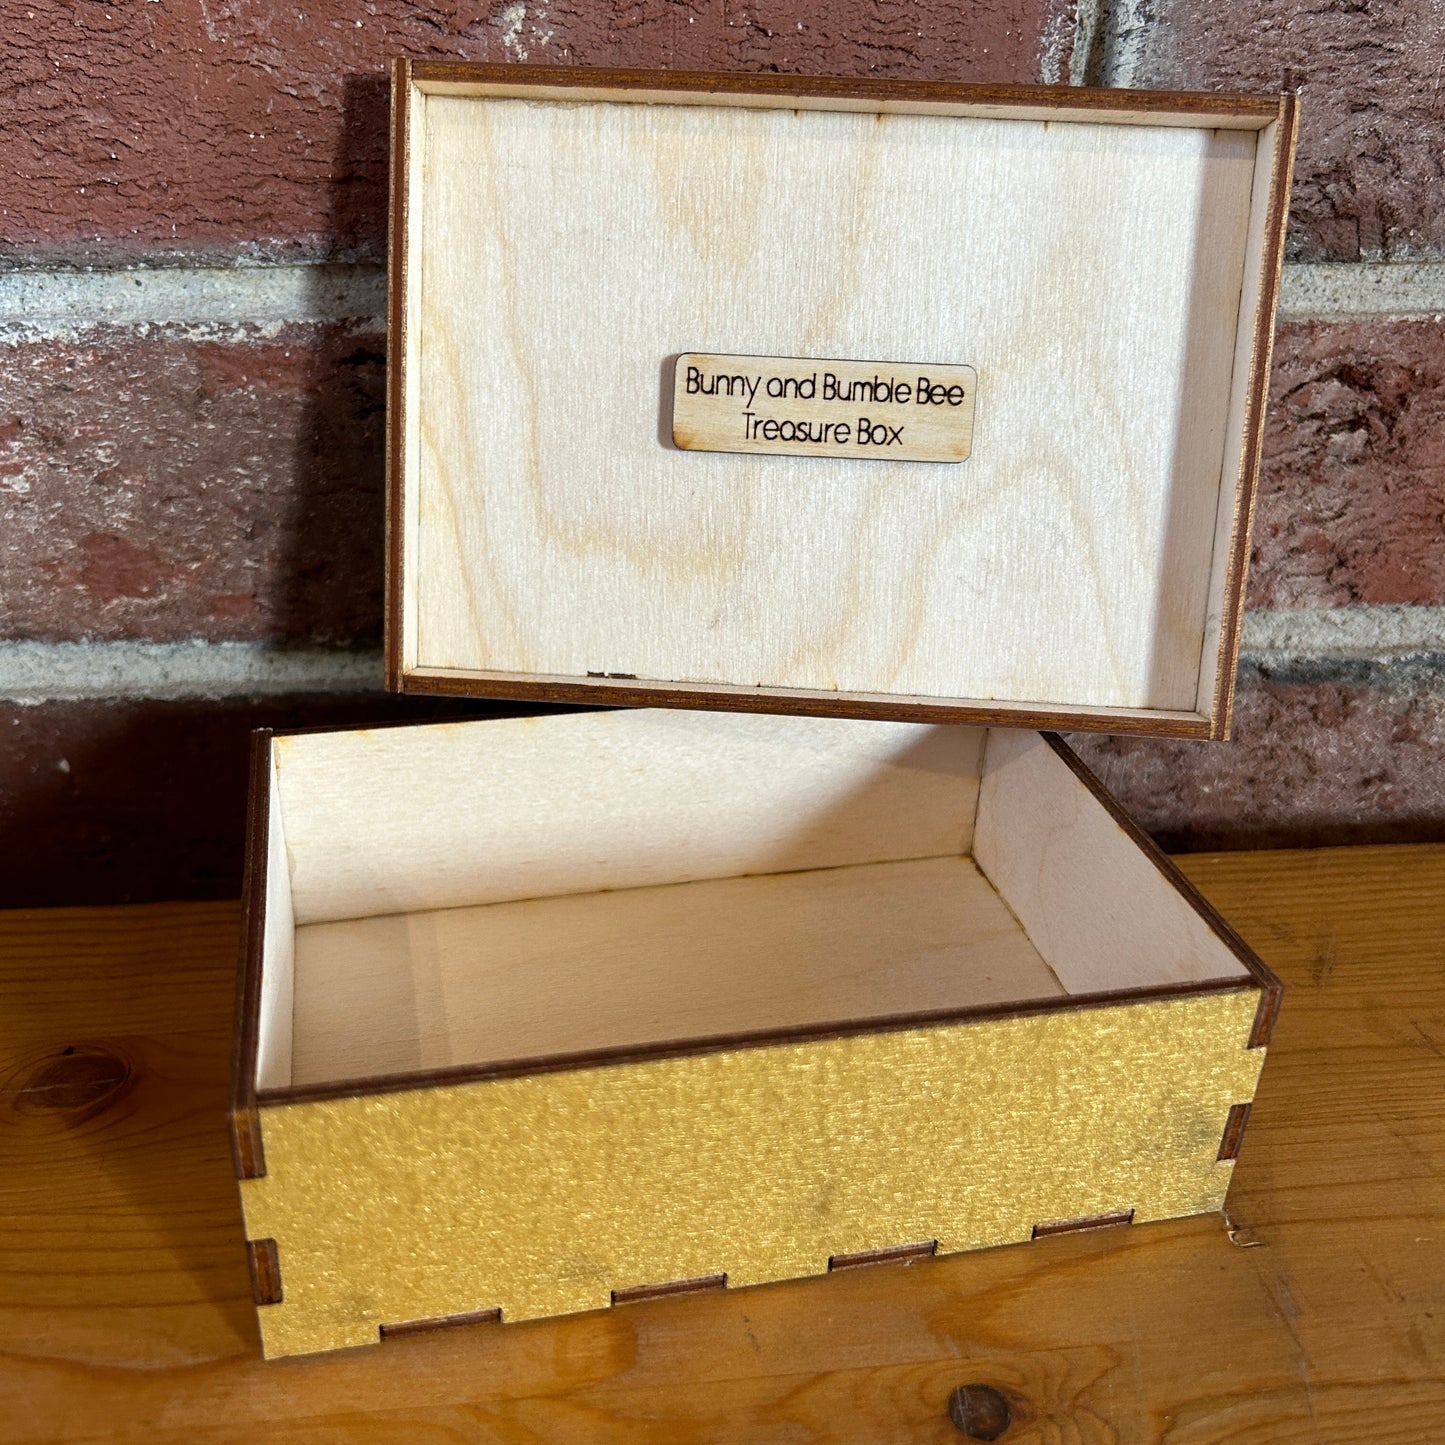 Bunny and Bumble Bee Treasure Box